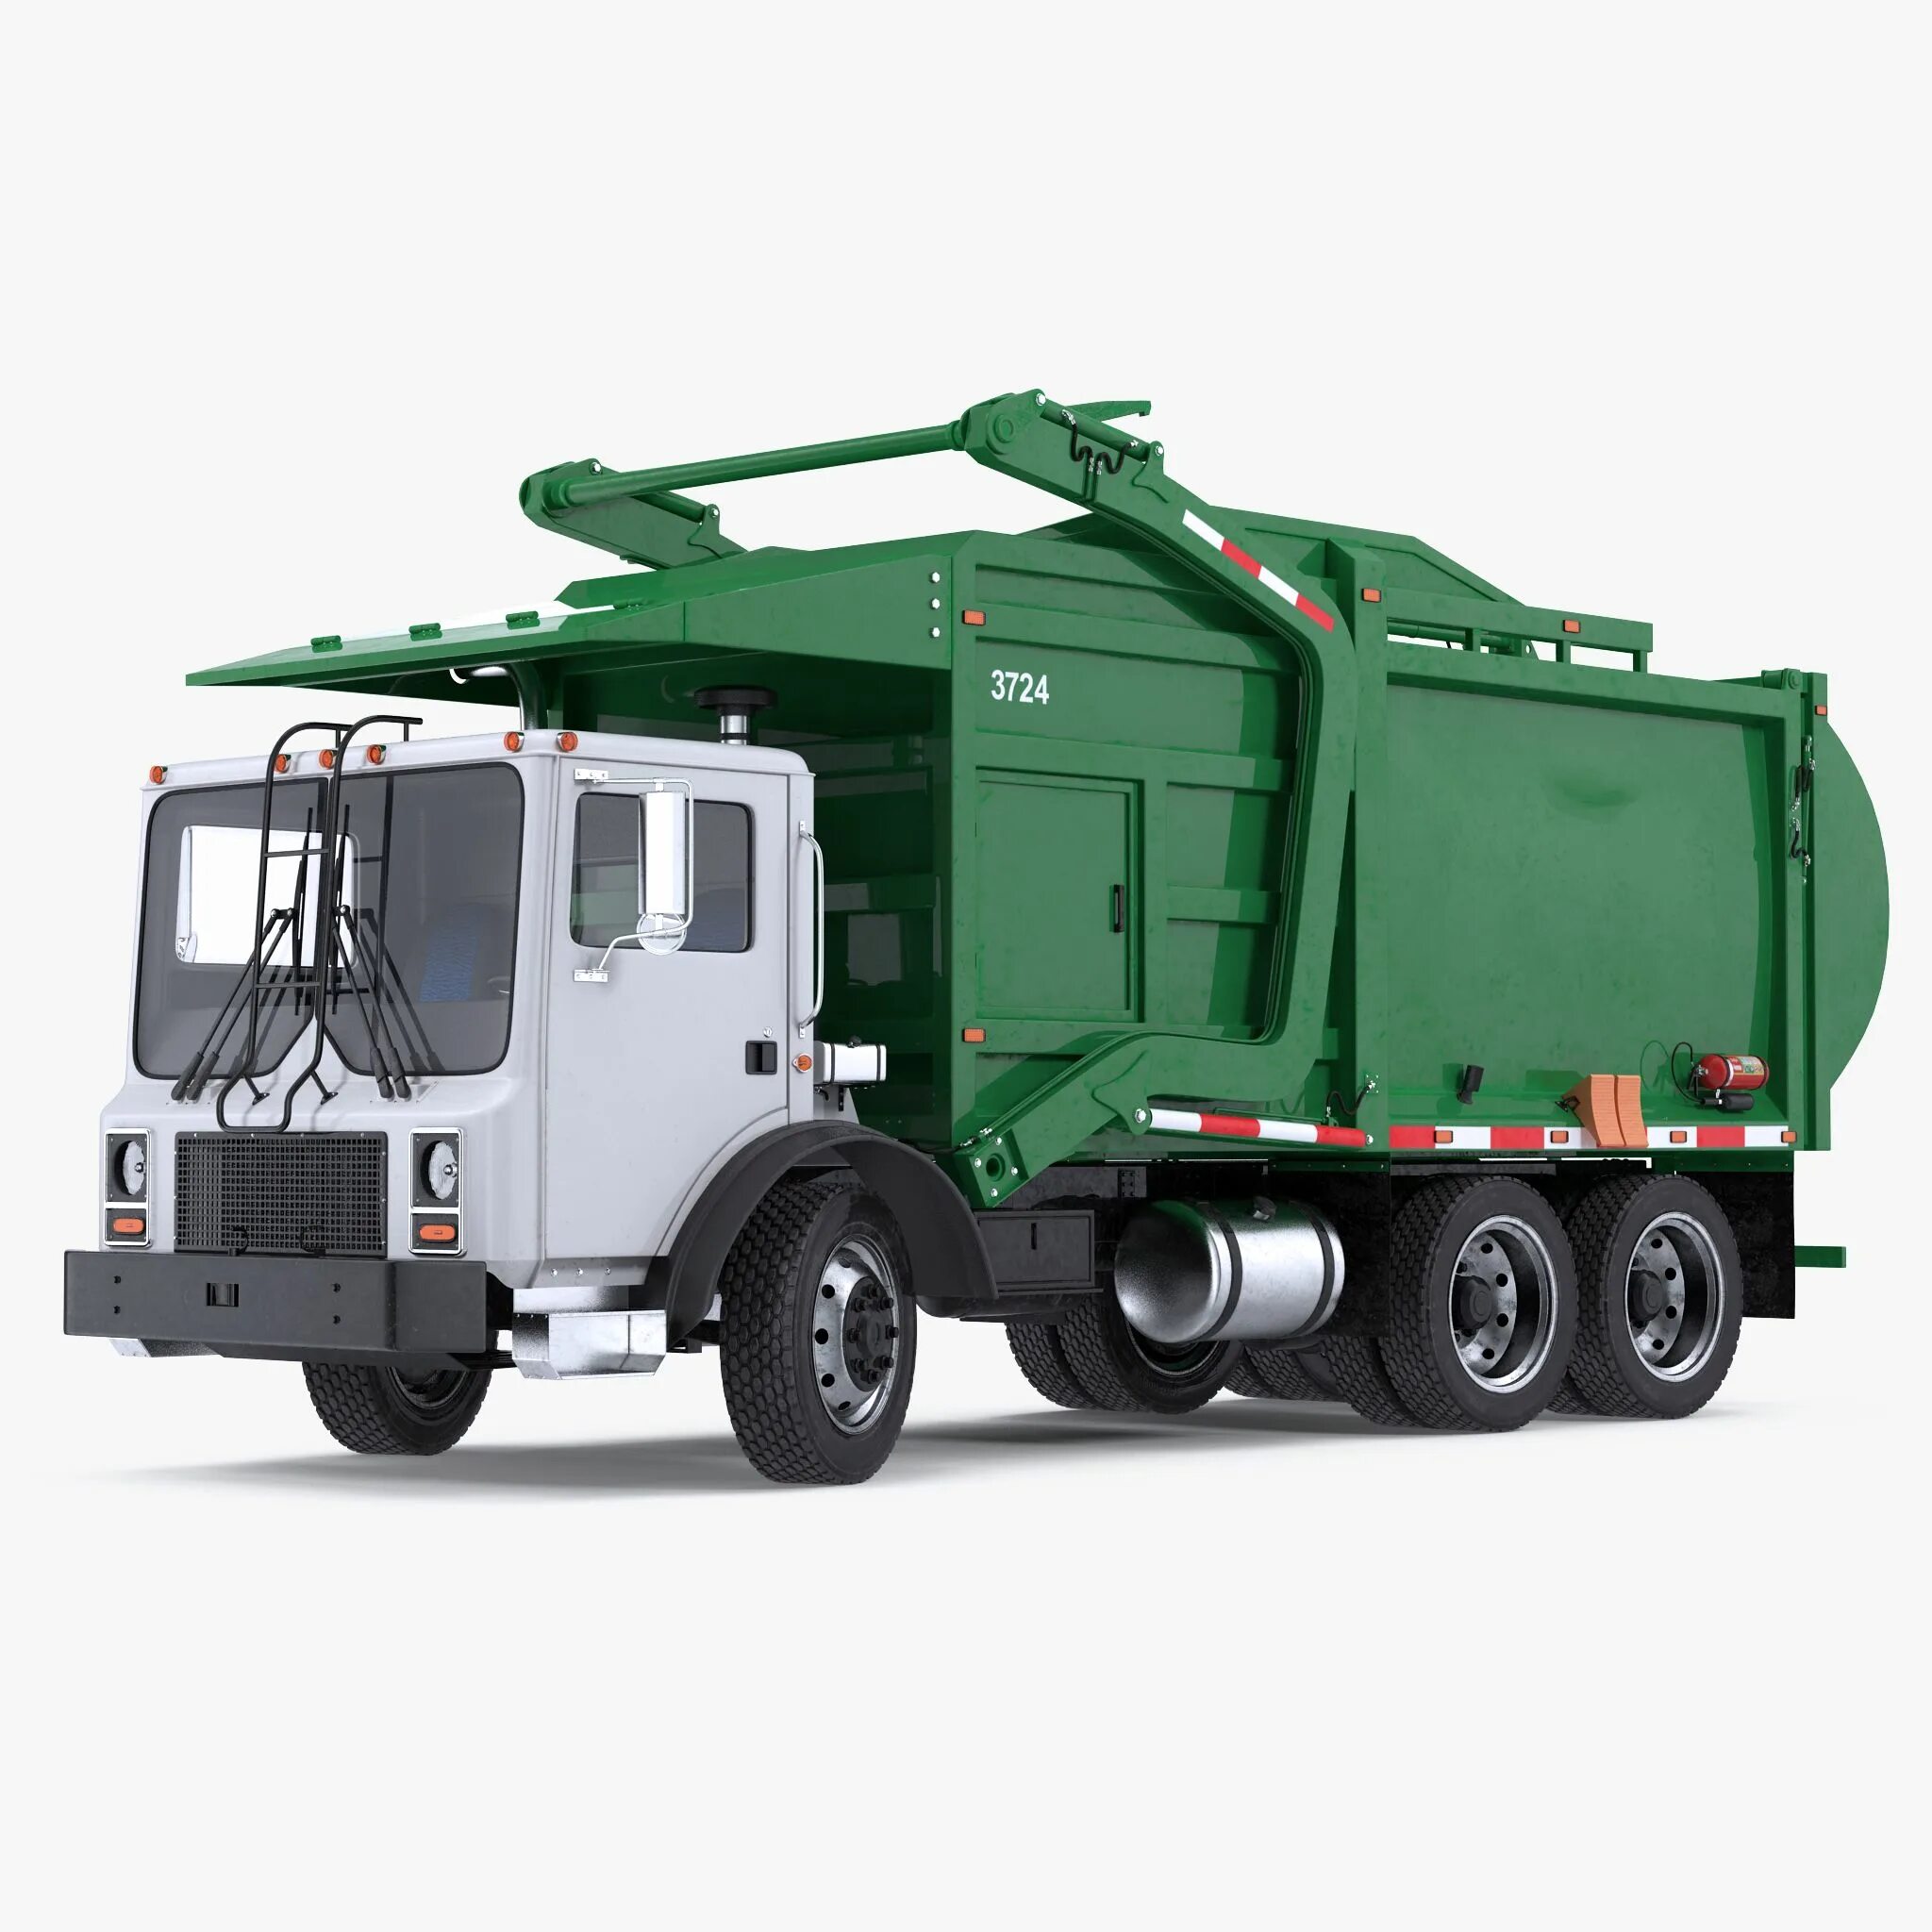 Garbage Truck мусоровоз. МВ-10 мусоровоз. Компактор для мусоровоза. Мусоровоз 3